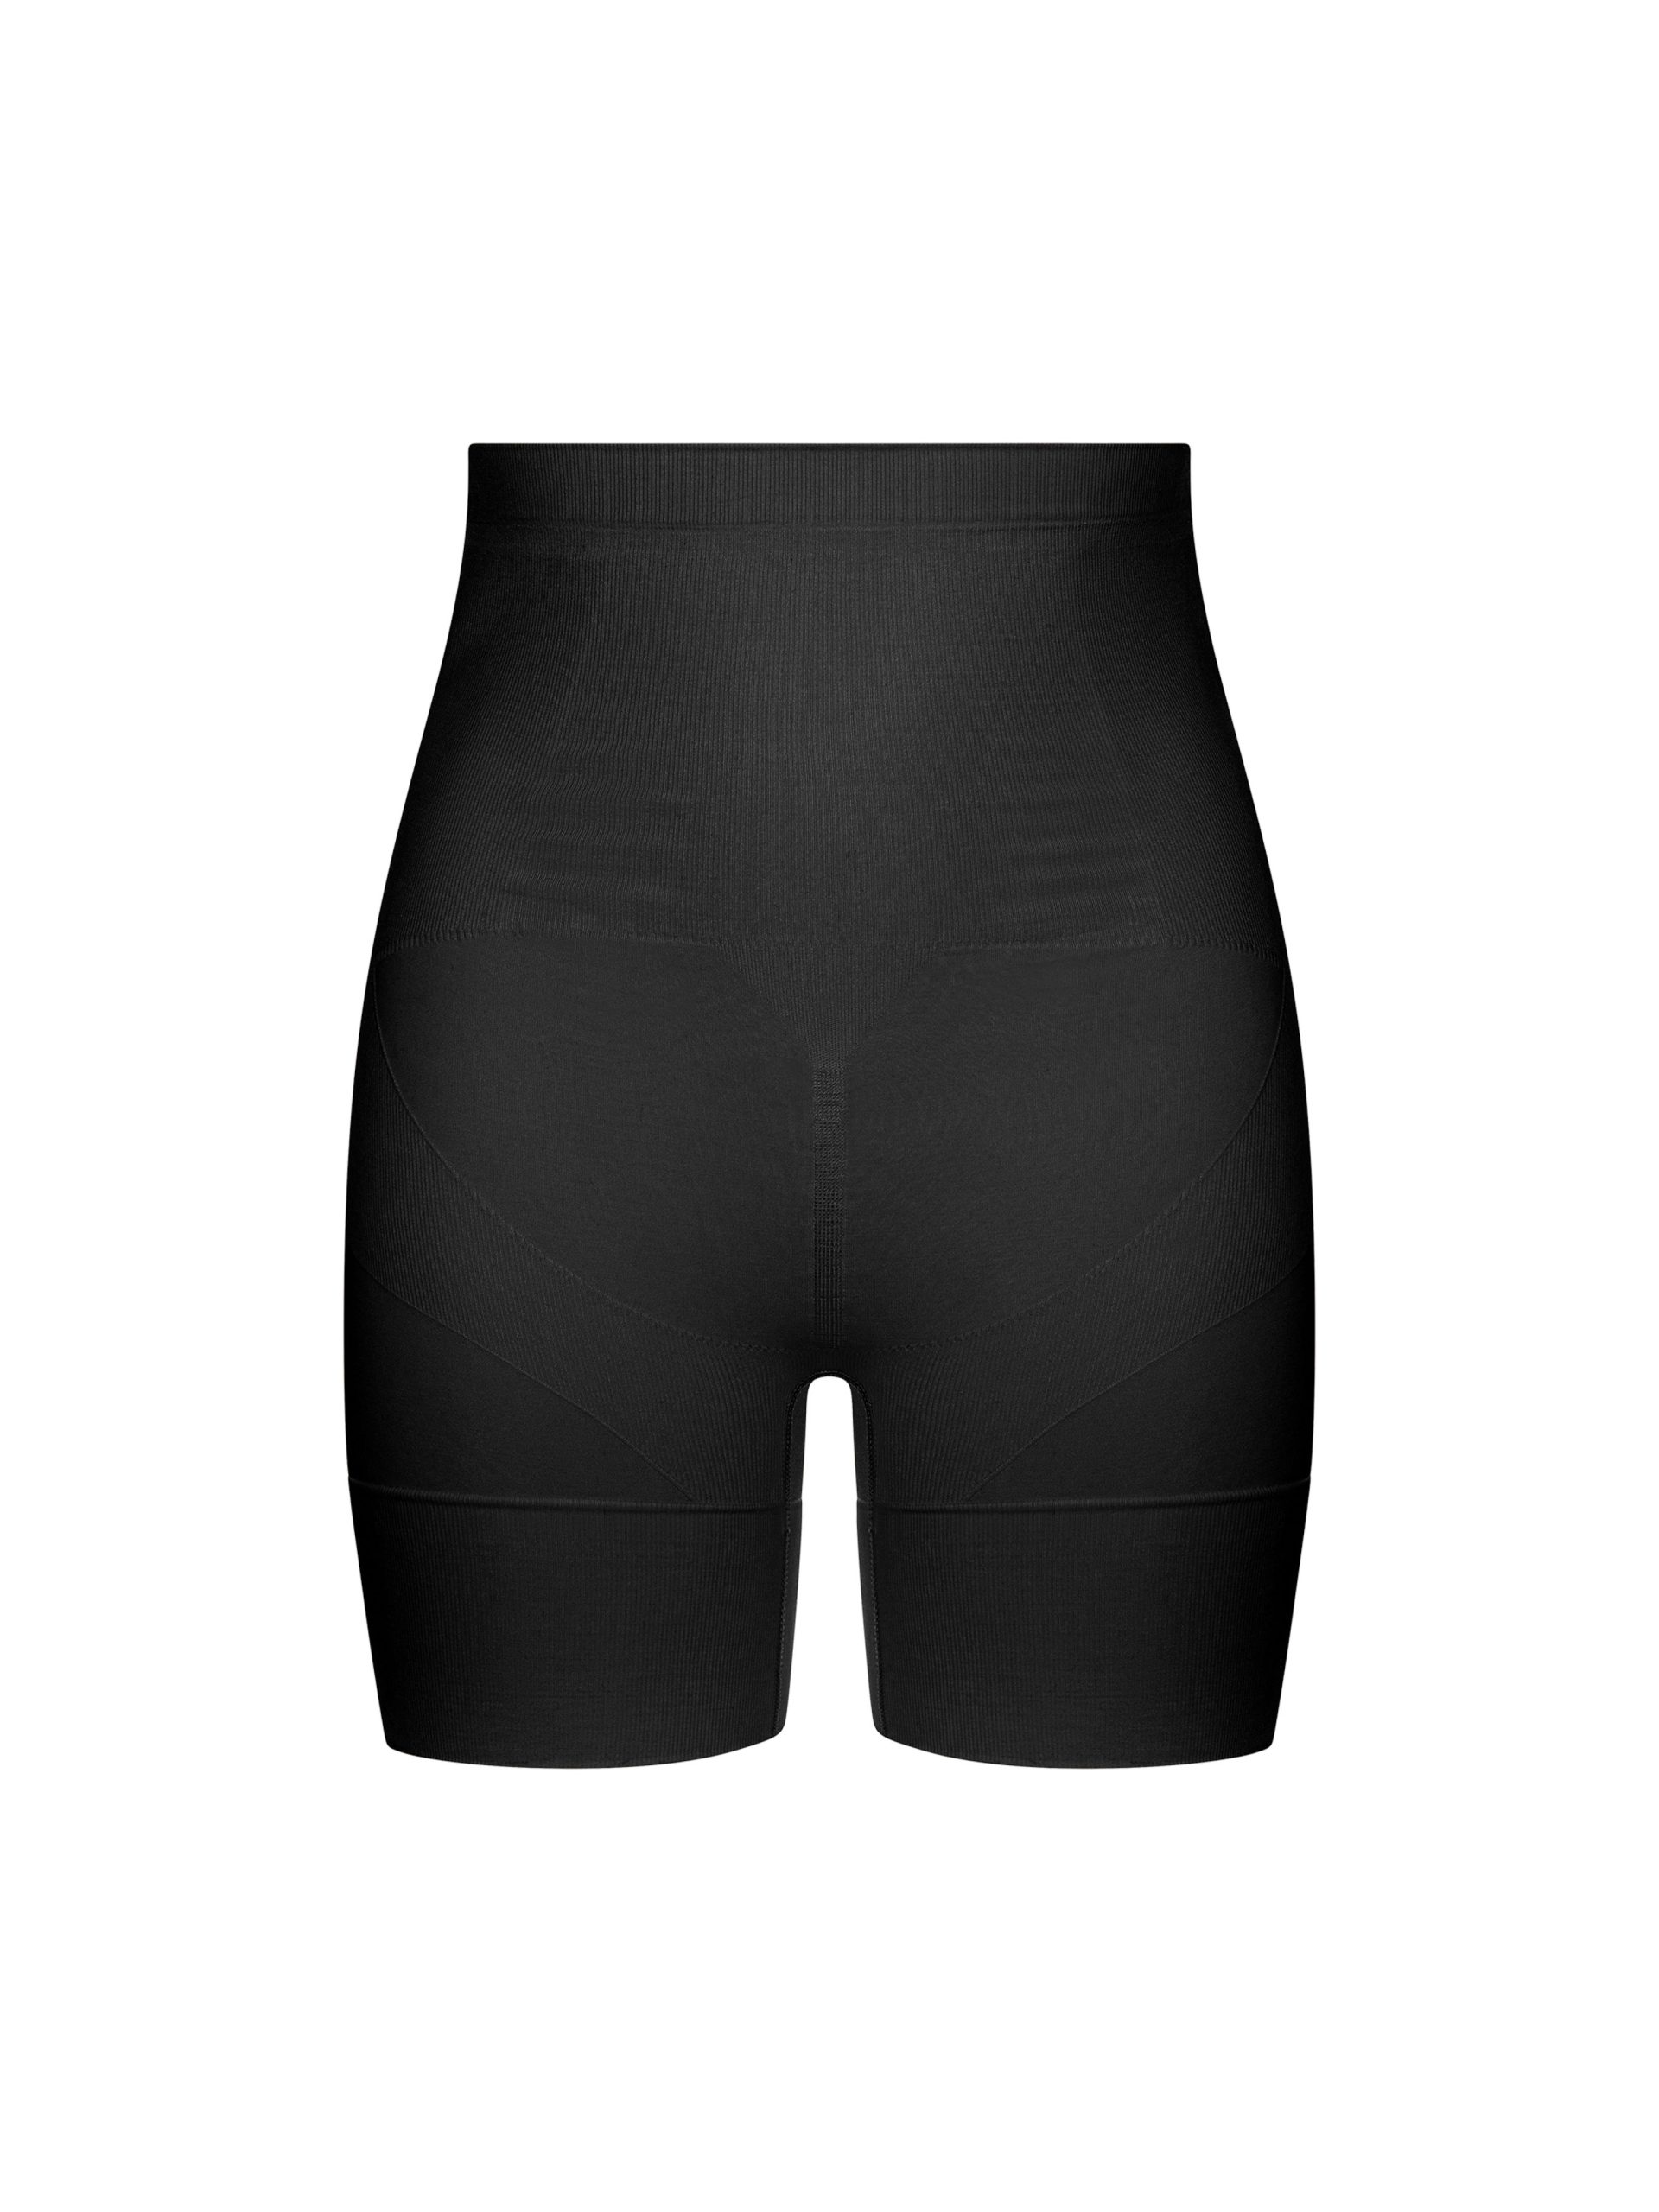 CLiO Women's Mesh Shaping Shorts - Black